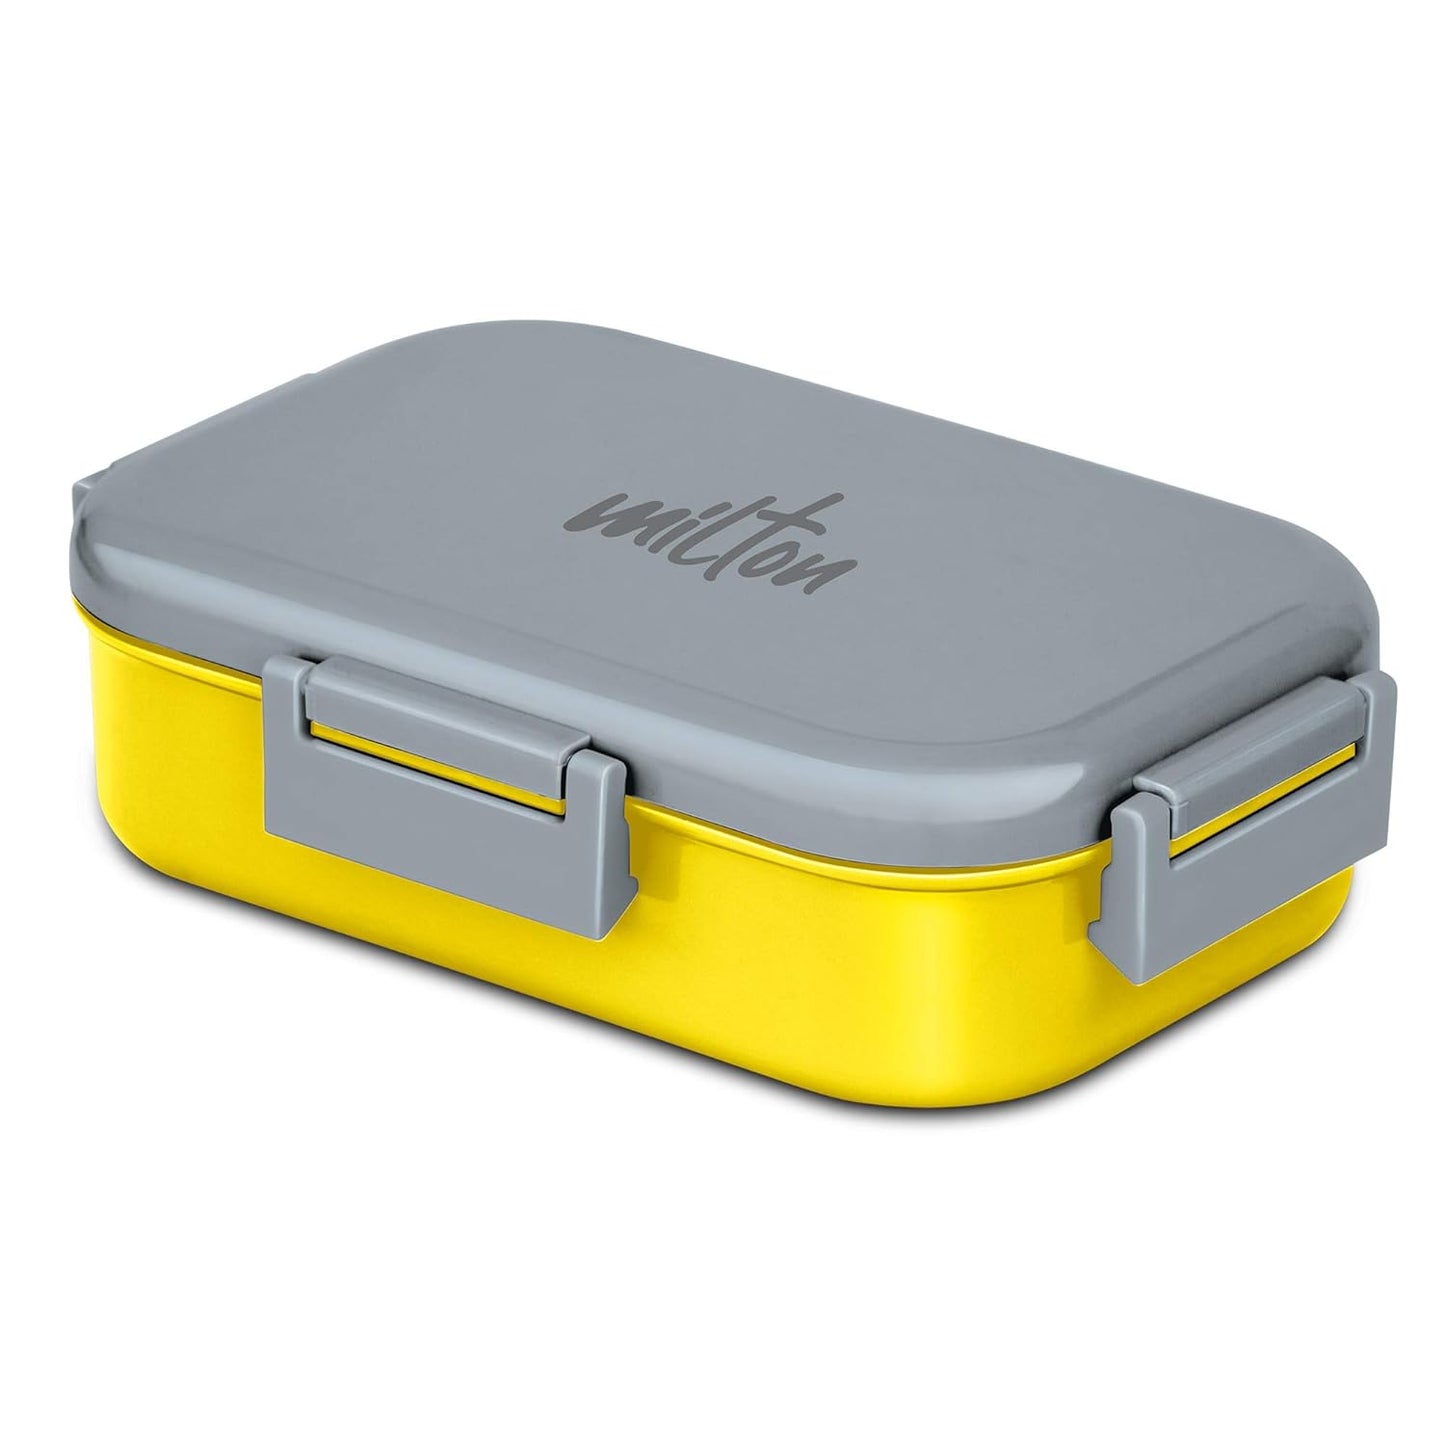 MILTON Senior Flatmate Inner Stainless Steel Tiffin Box 700 ml Lunch Box for Kids and Adult both